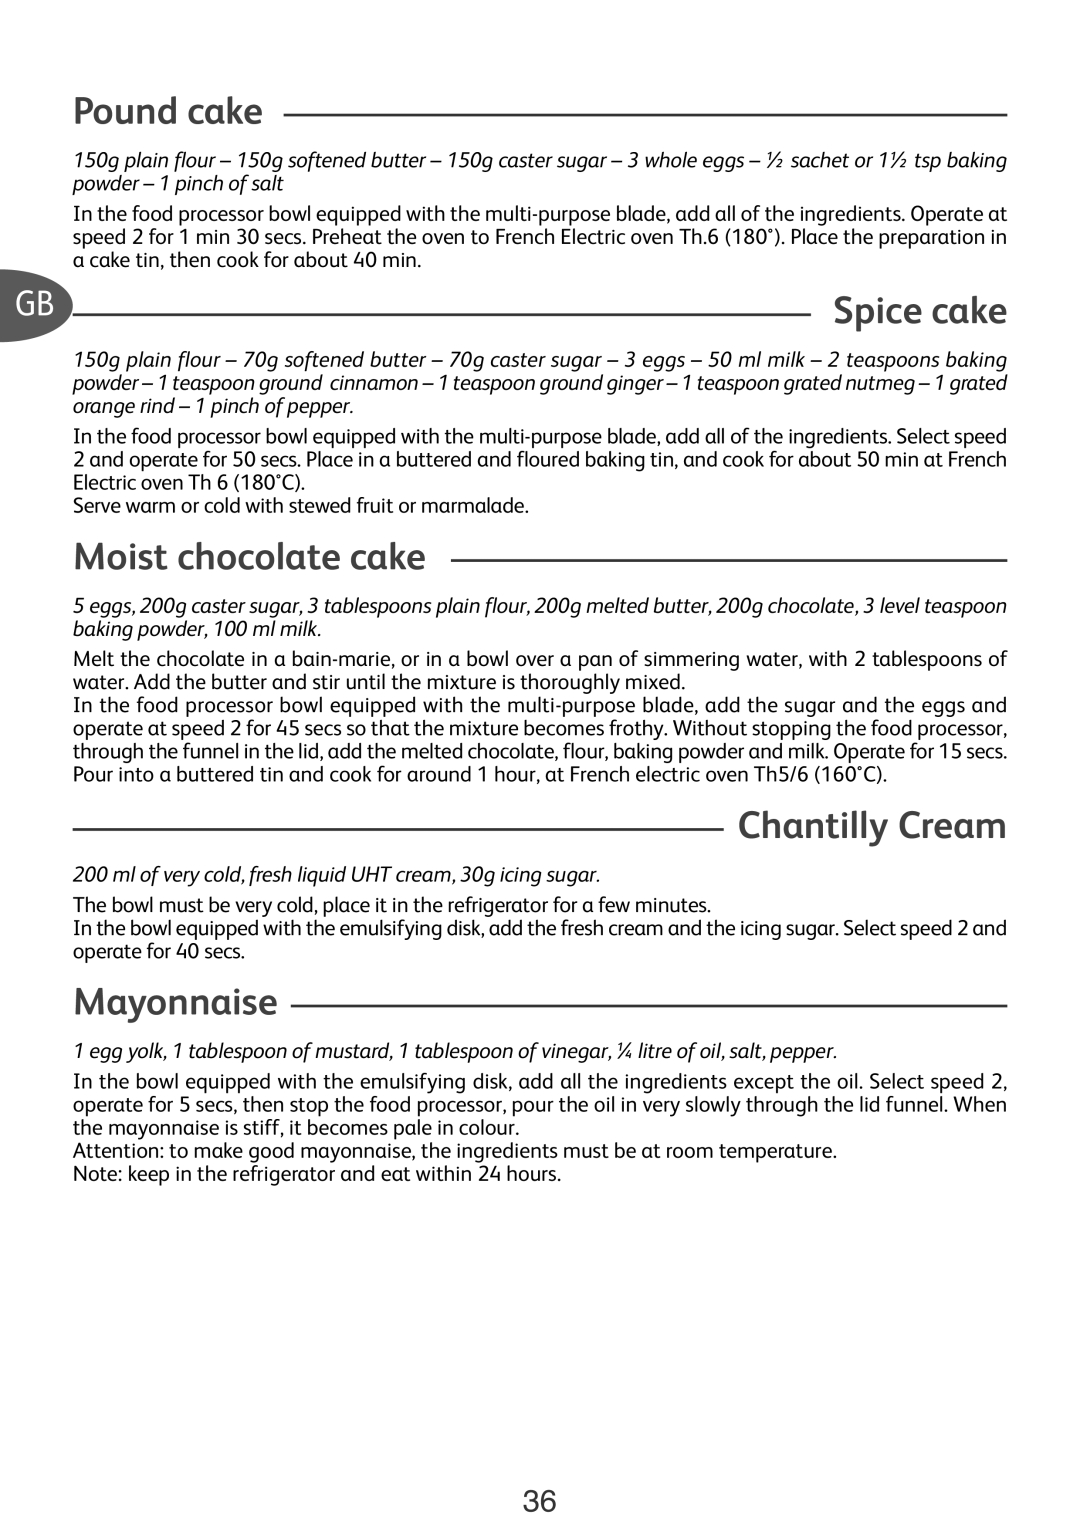 Tefal DO250DA3, DO303E40, DO250DAN, FP652DA3 manual Pound cake, Moist chocolate cake, Chantilly Cream, Mayonnaise, Spice cake 